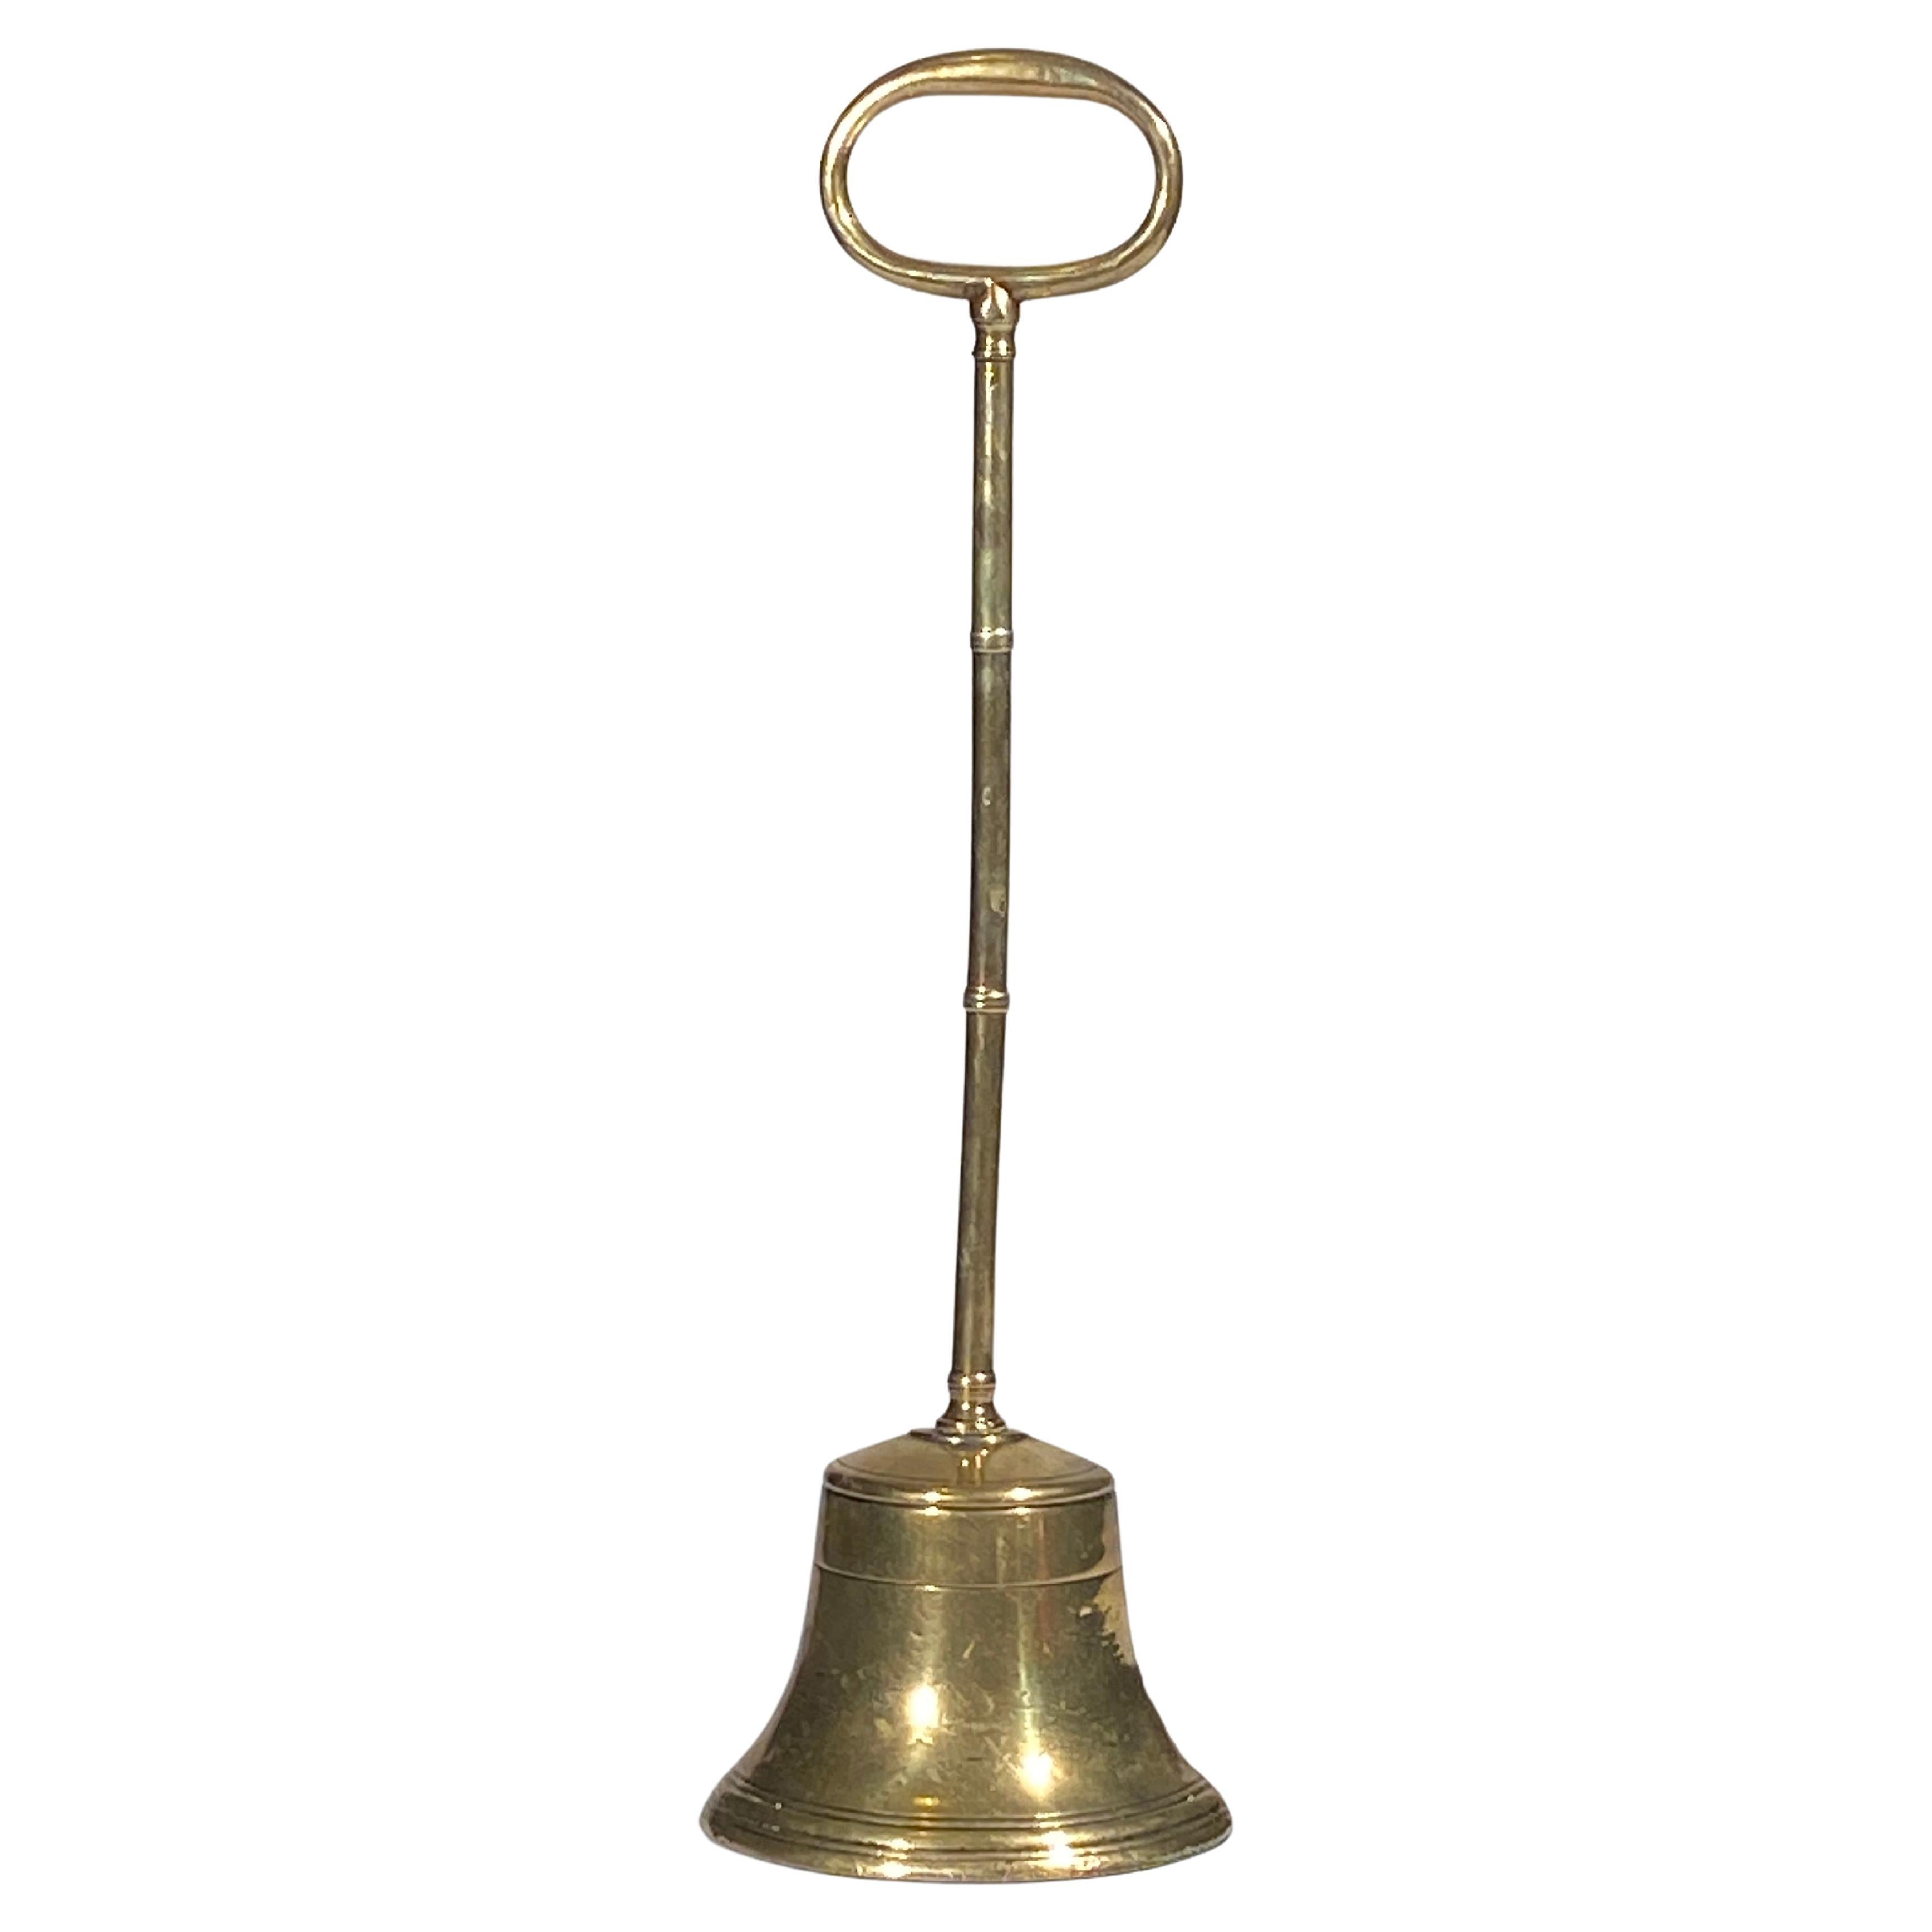 Georgianischer Glockenförmiger Türstopper aus Messing, 18. Jahrhundert